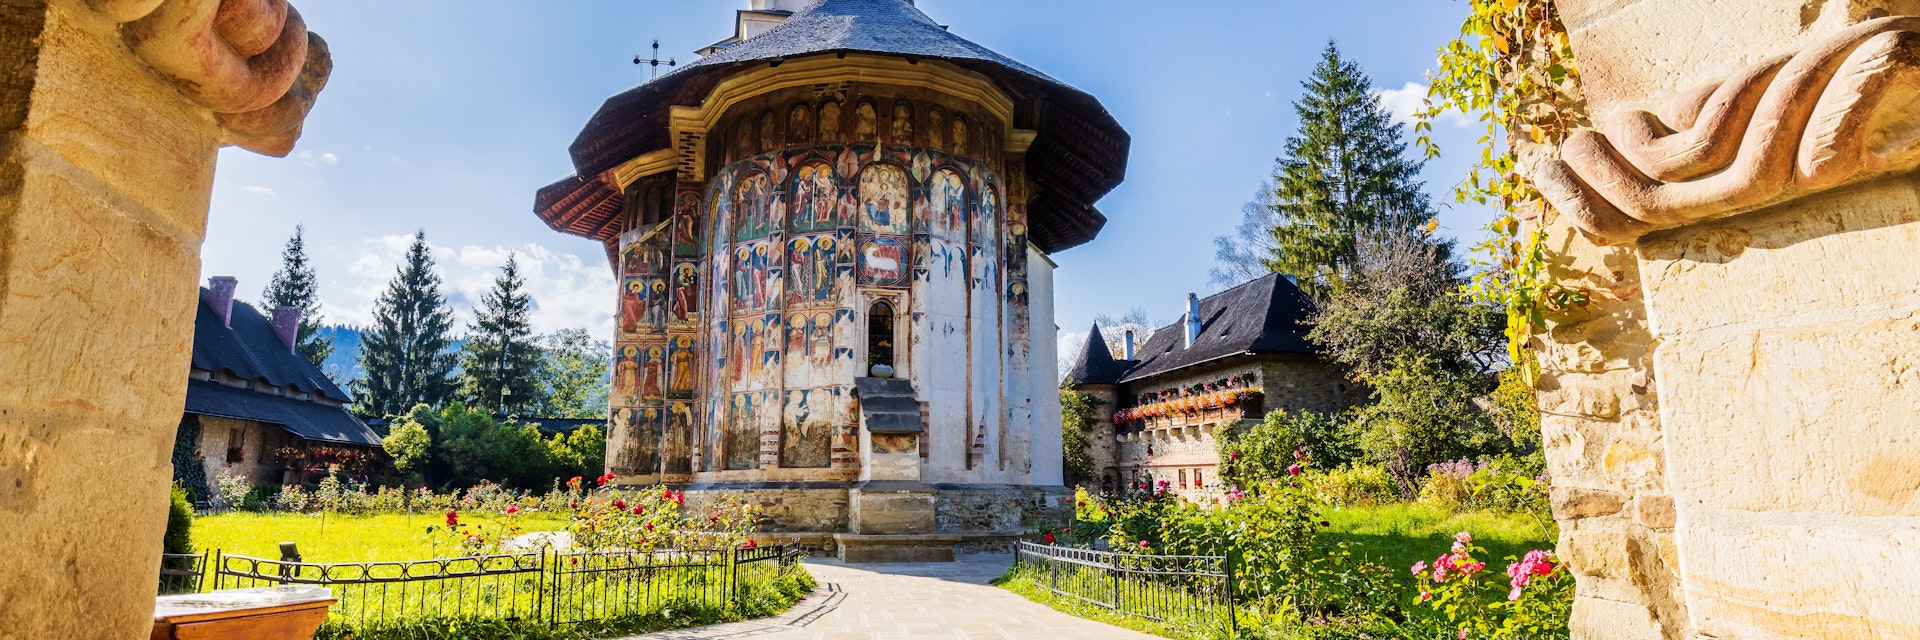 The Moldovita Monastery, Romania - September 30, 2019: One of Romanian Orthodox monasteries in southern Bucovina.